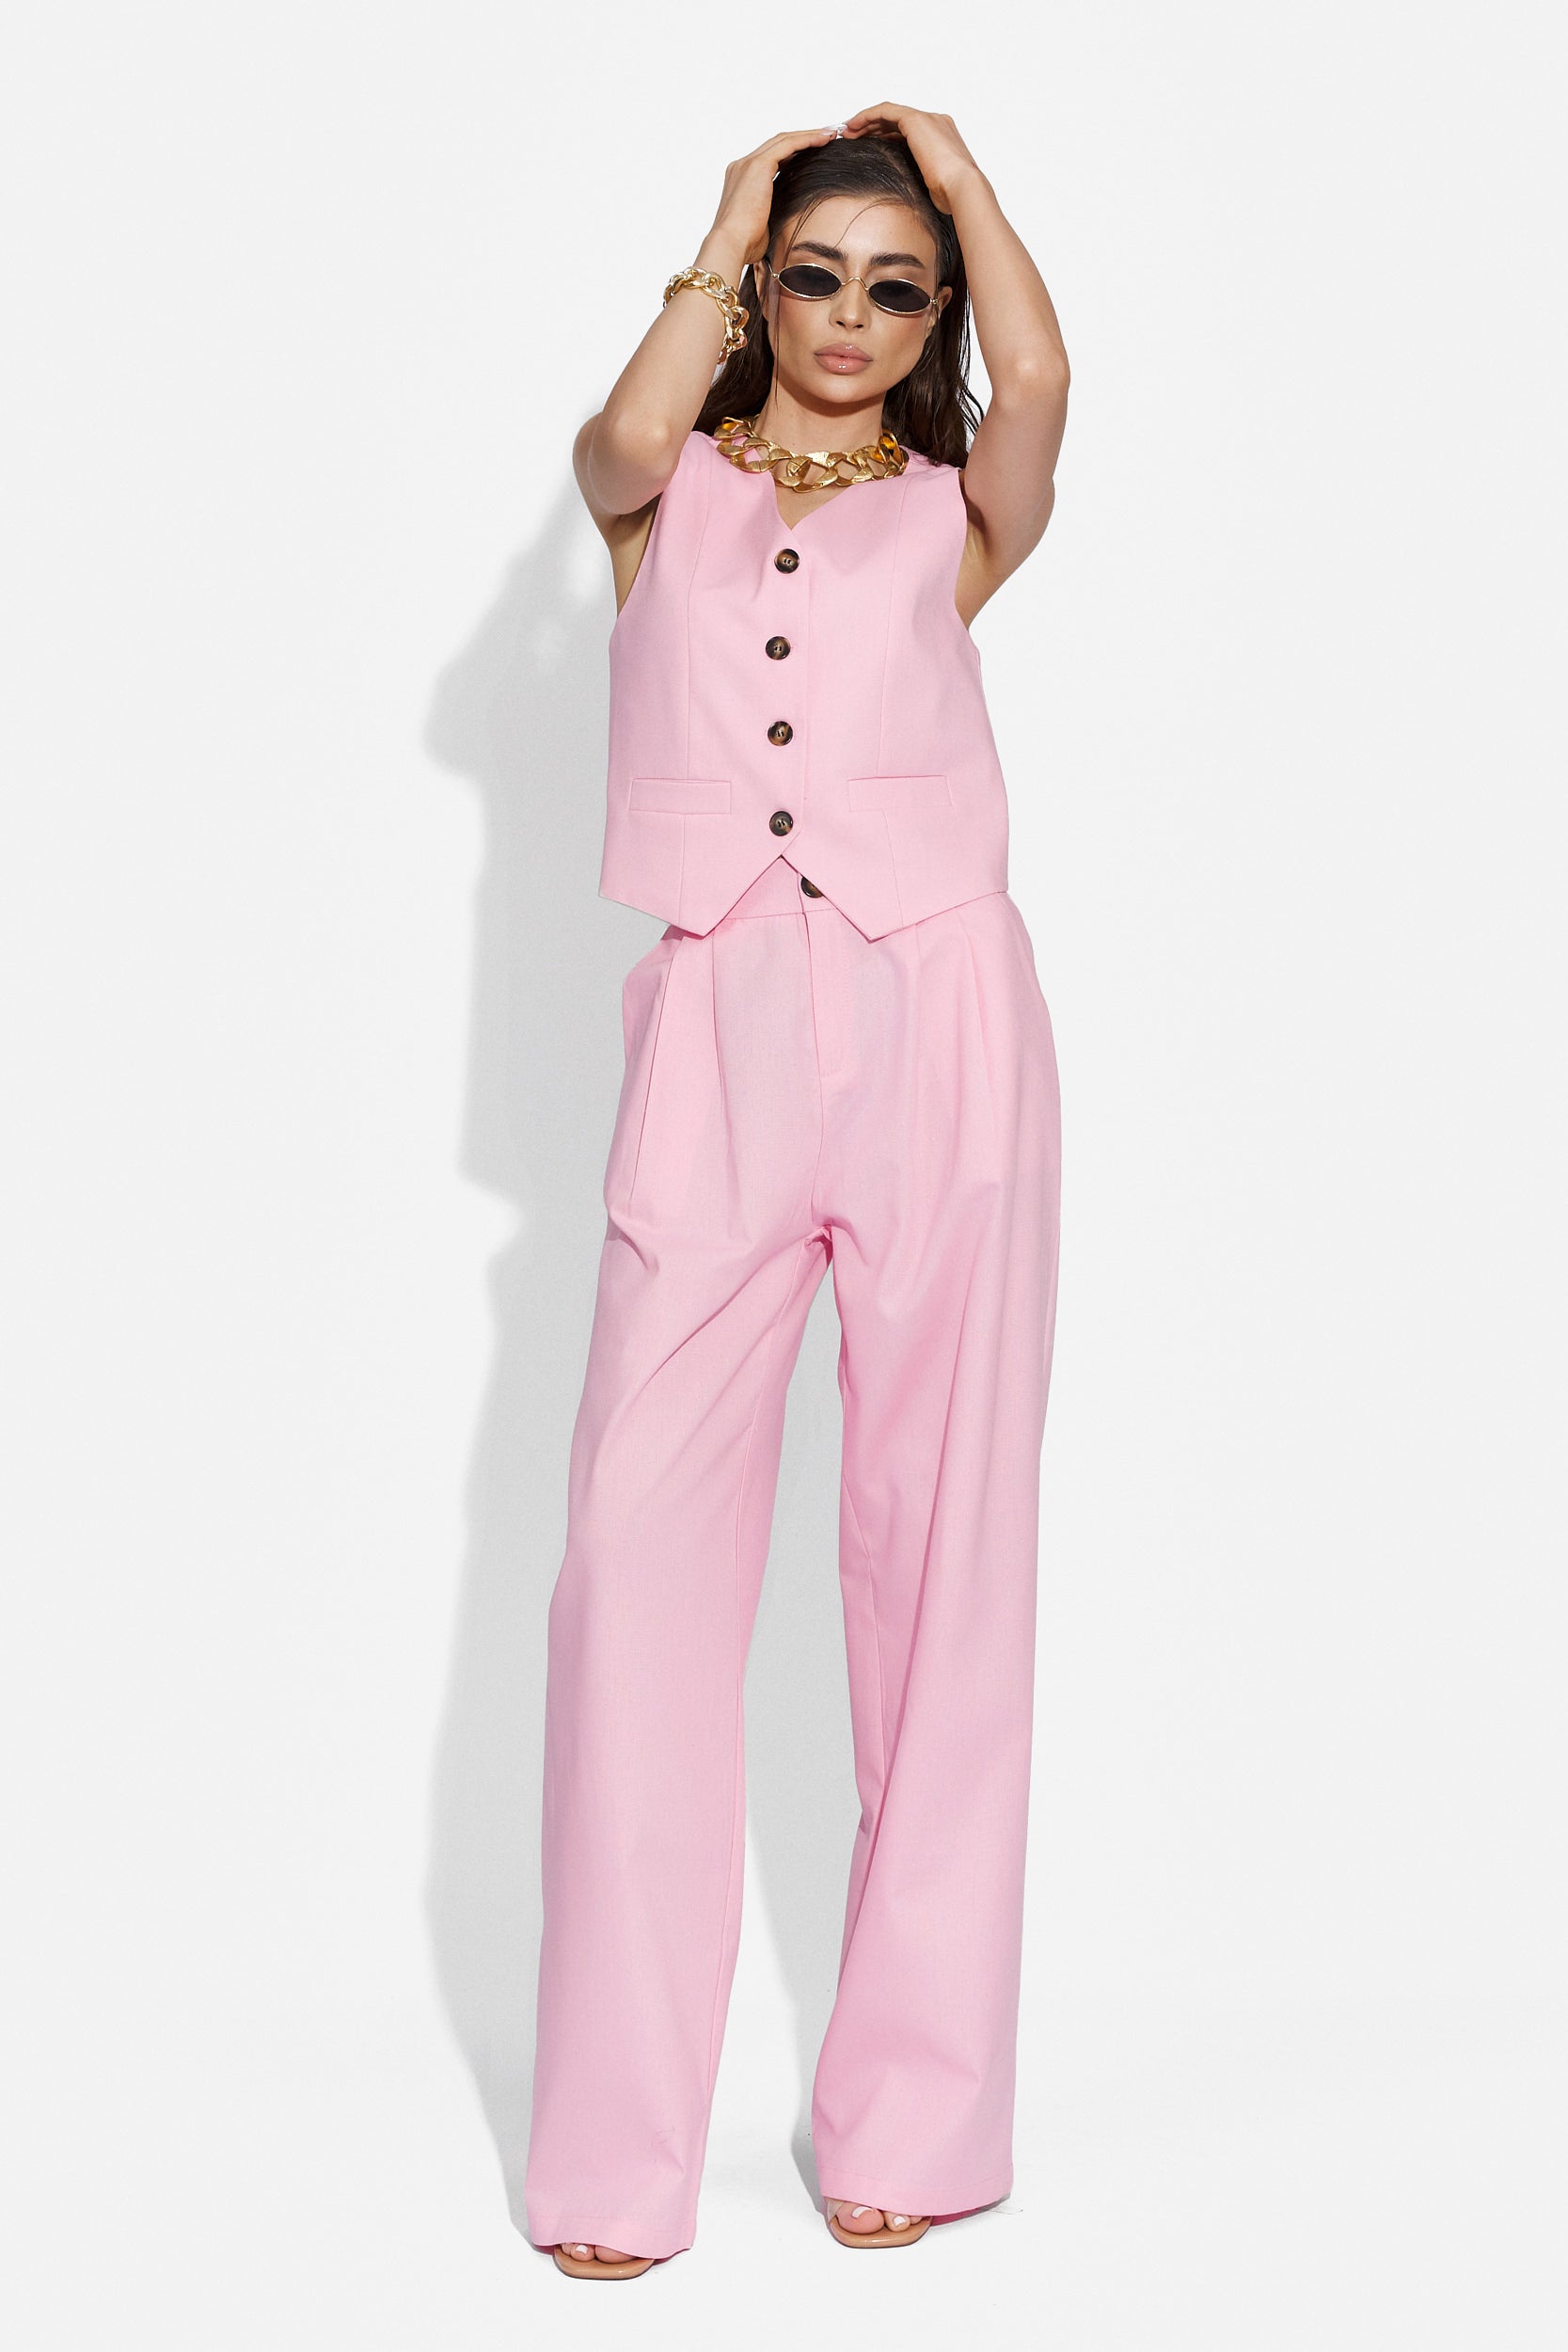 Velasy Bogas casual ladies pink pants suit